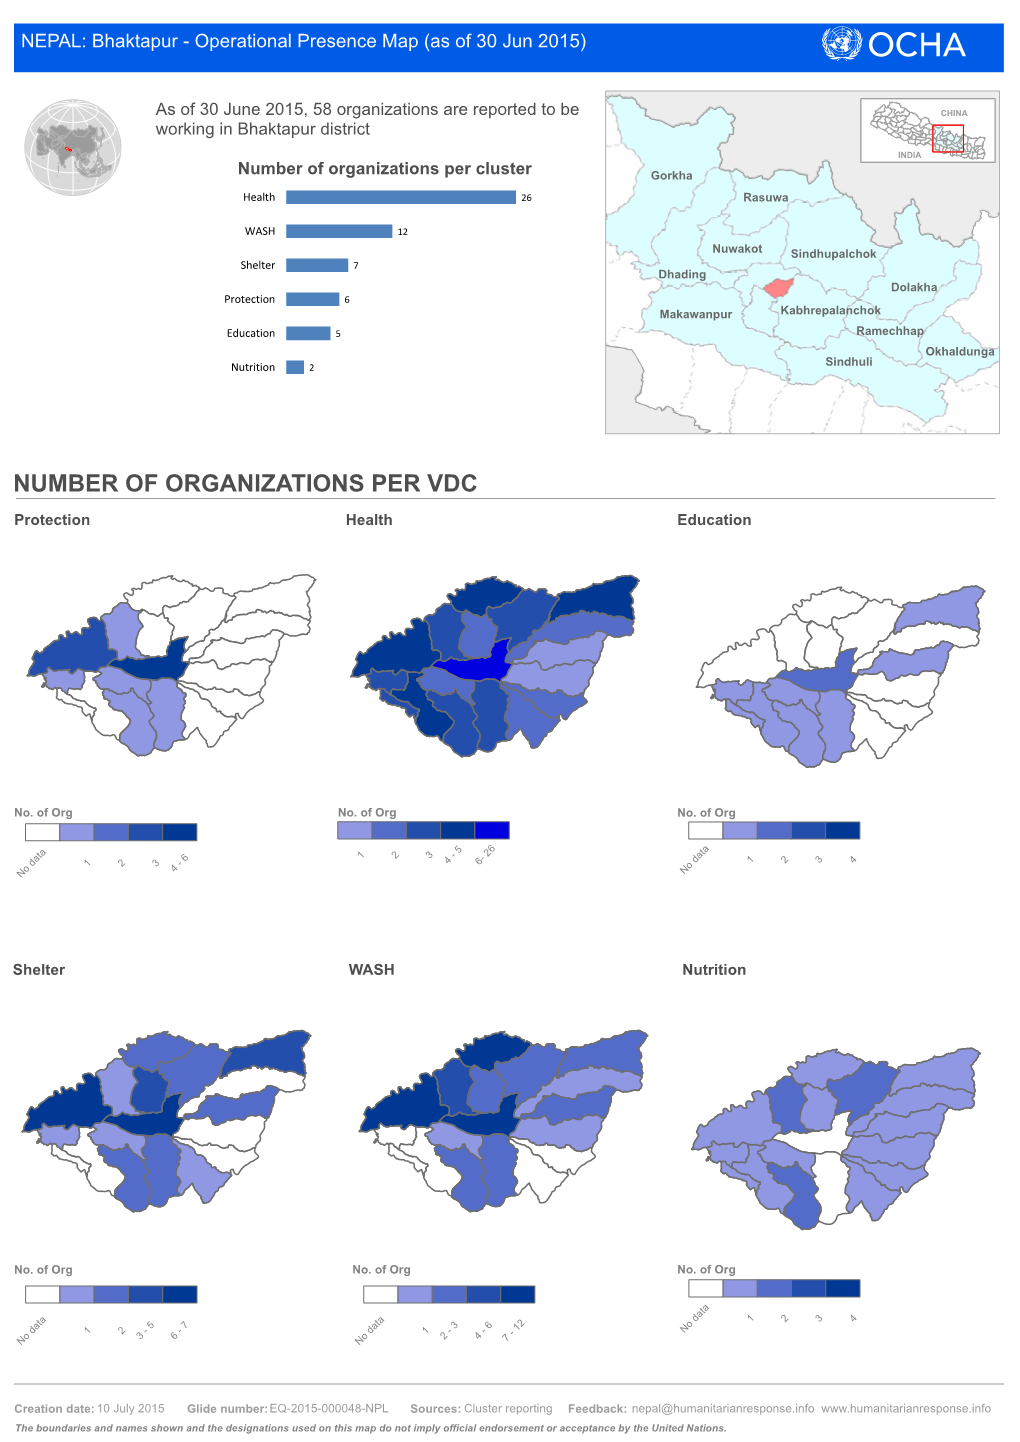 Number of Organizations Per Cluster Gorkha